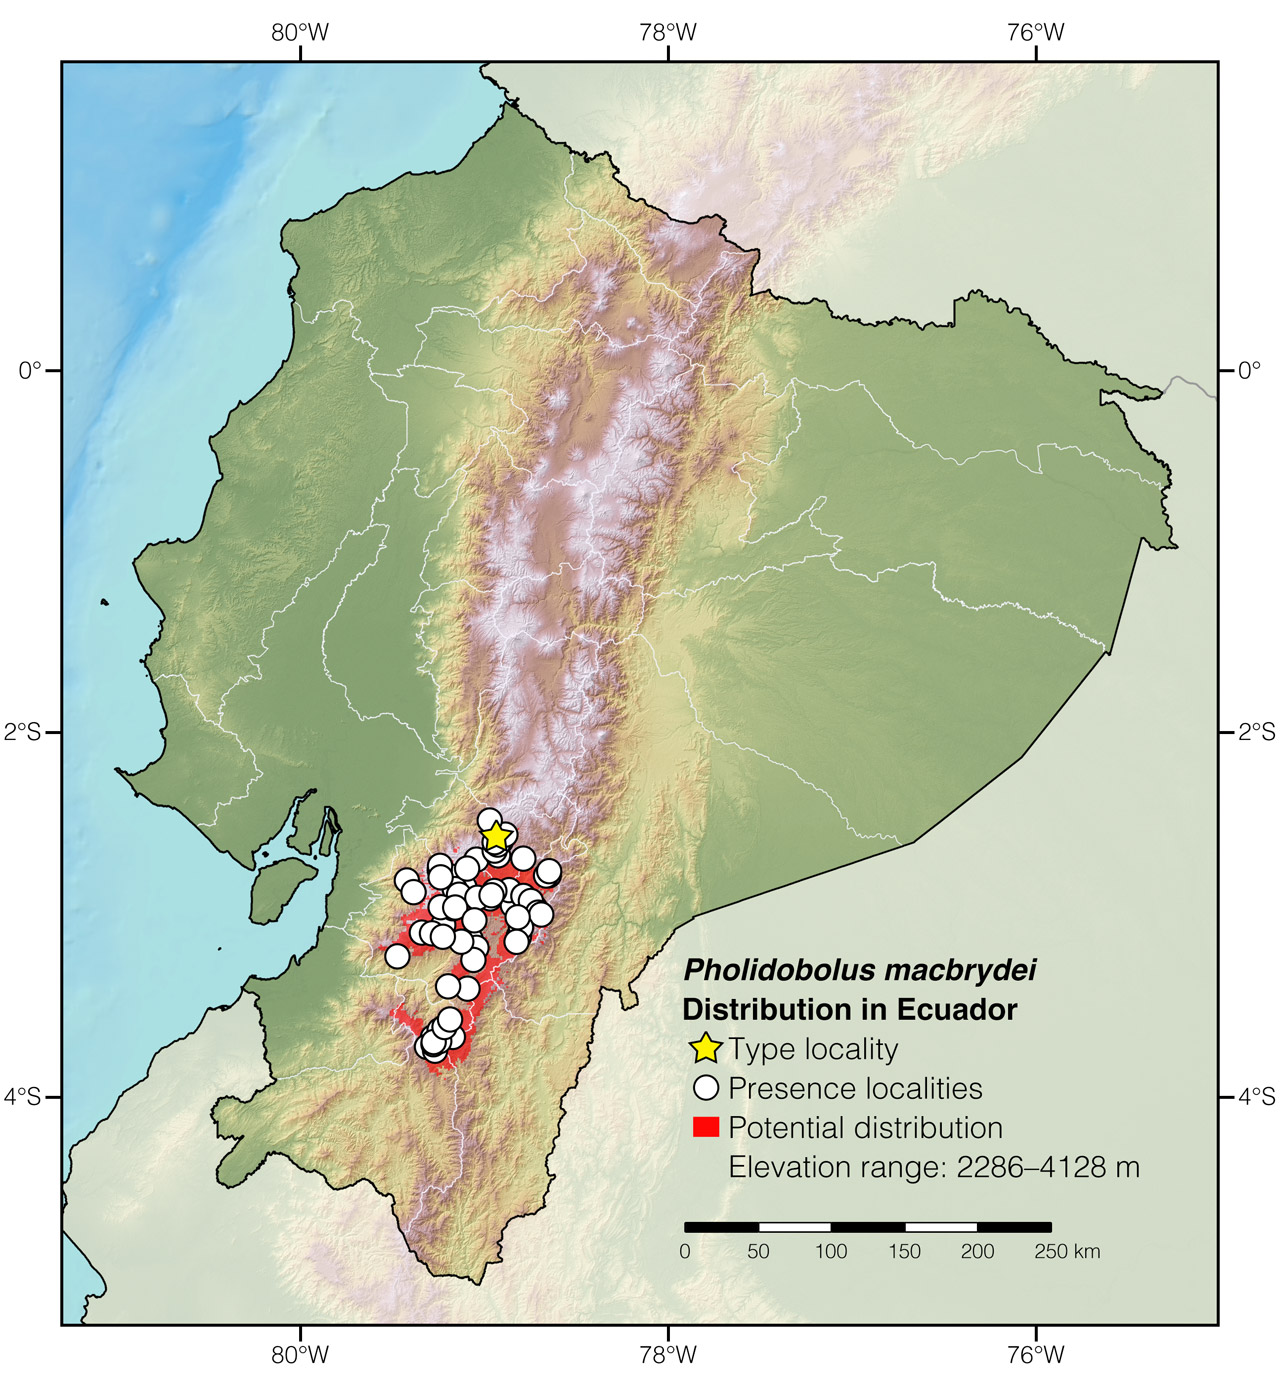 Distribution of Pholidobolus macbrydei in Ecuador